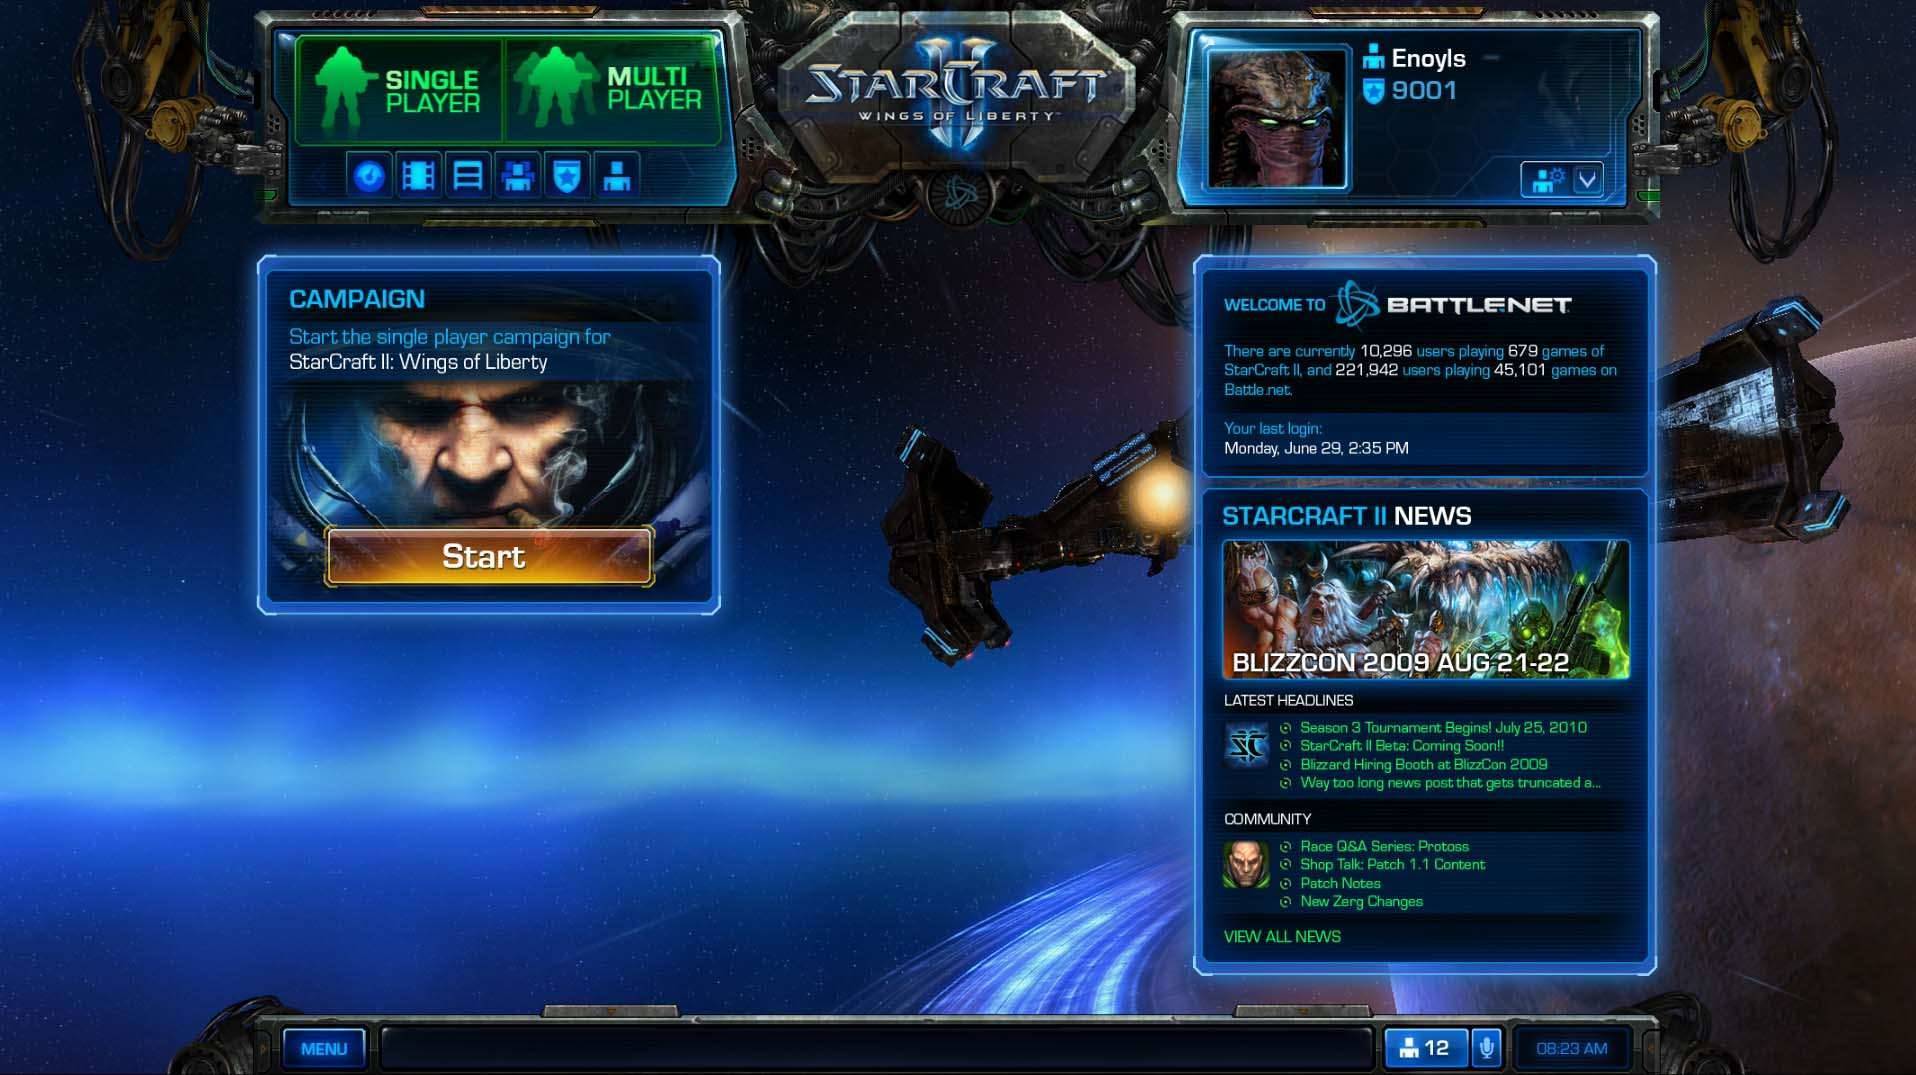 Starcraft 2 Single Player Campaign Patch